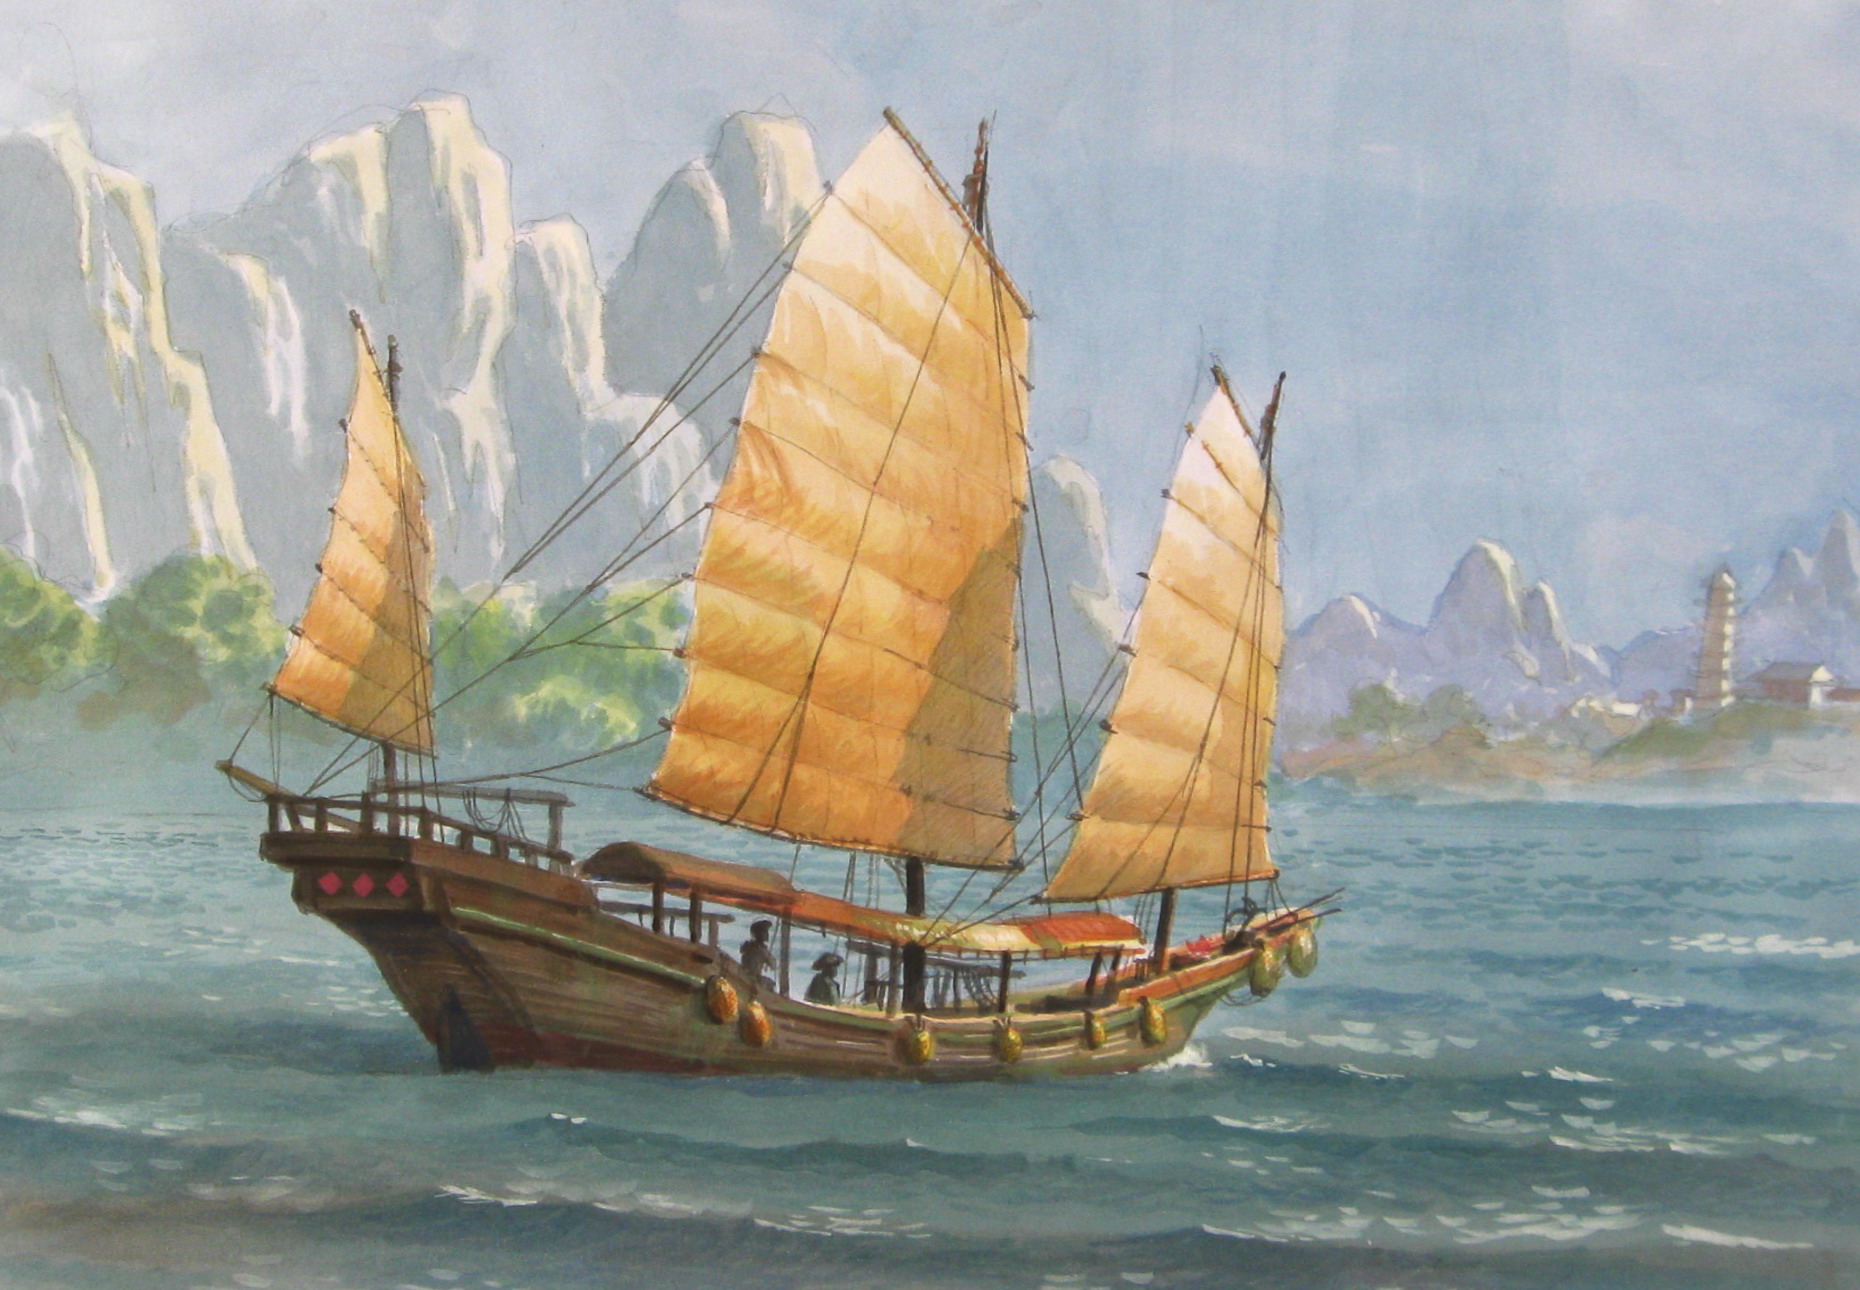 Chinese Junk Ship Painting Old \x3cb\x3eships paintings\x3c/b\x3e by 